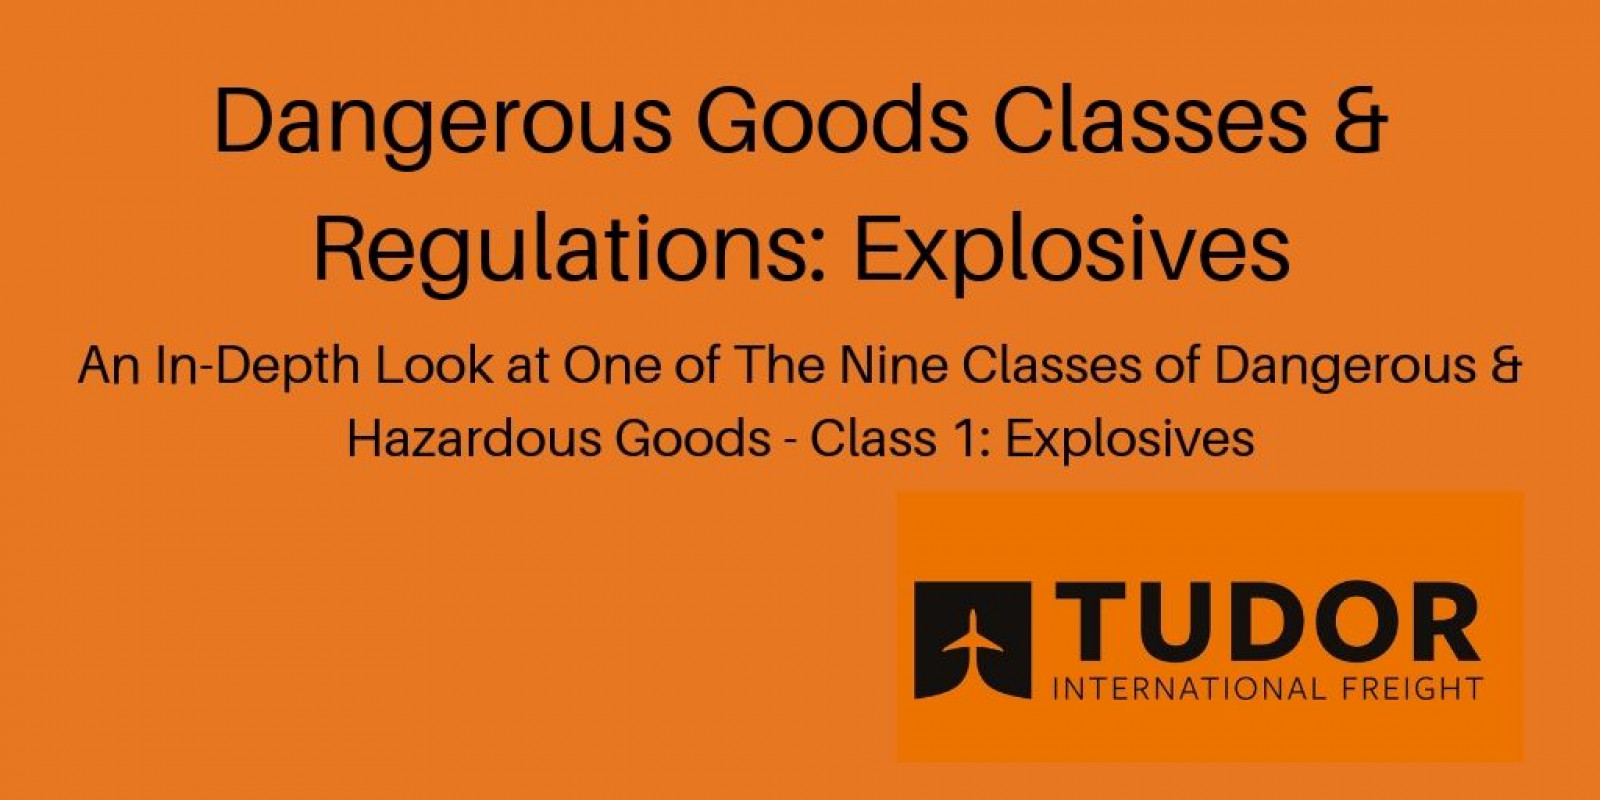 Dangerous Goods Classes & Regulations - Explosives